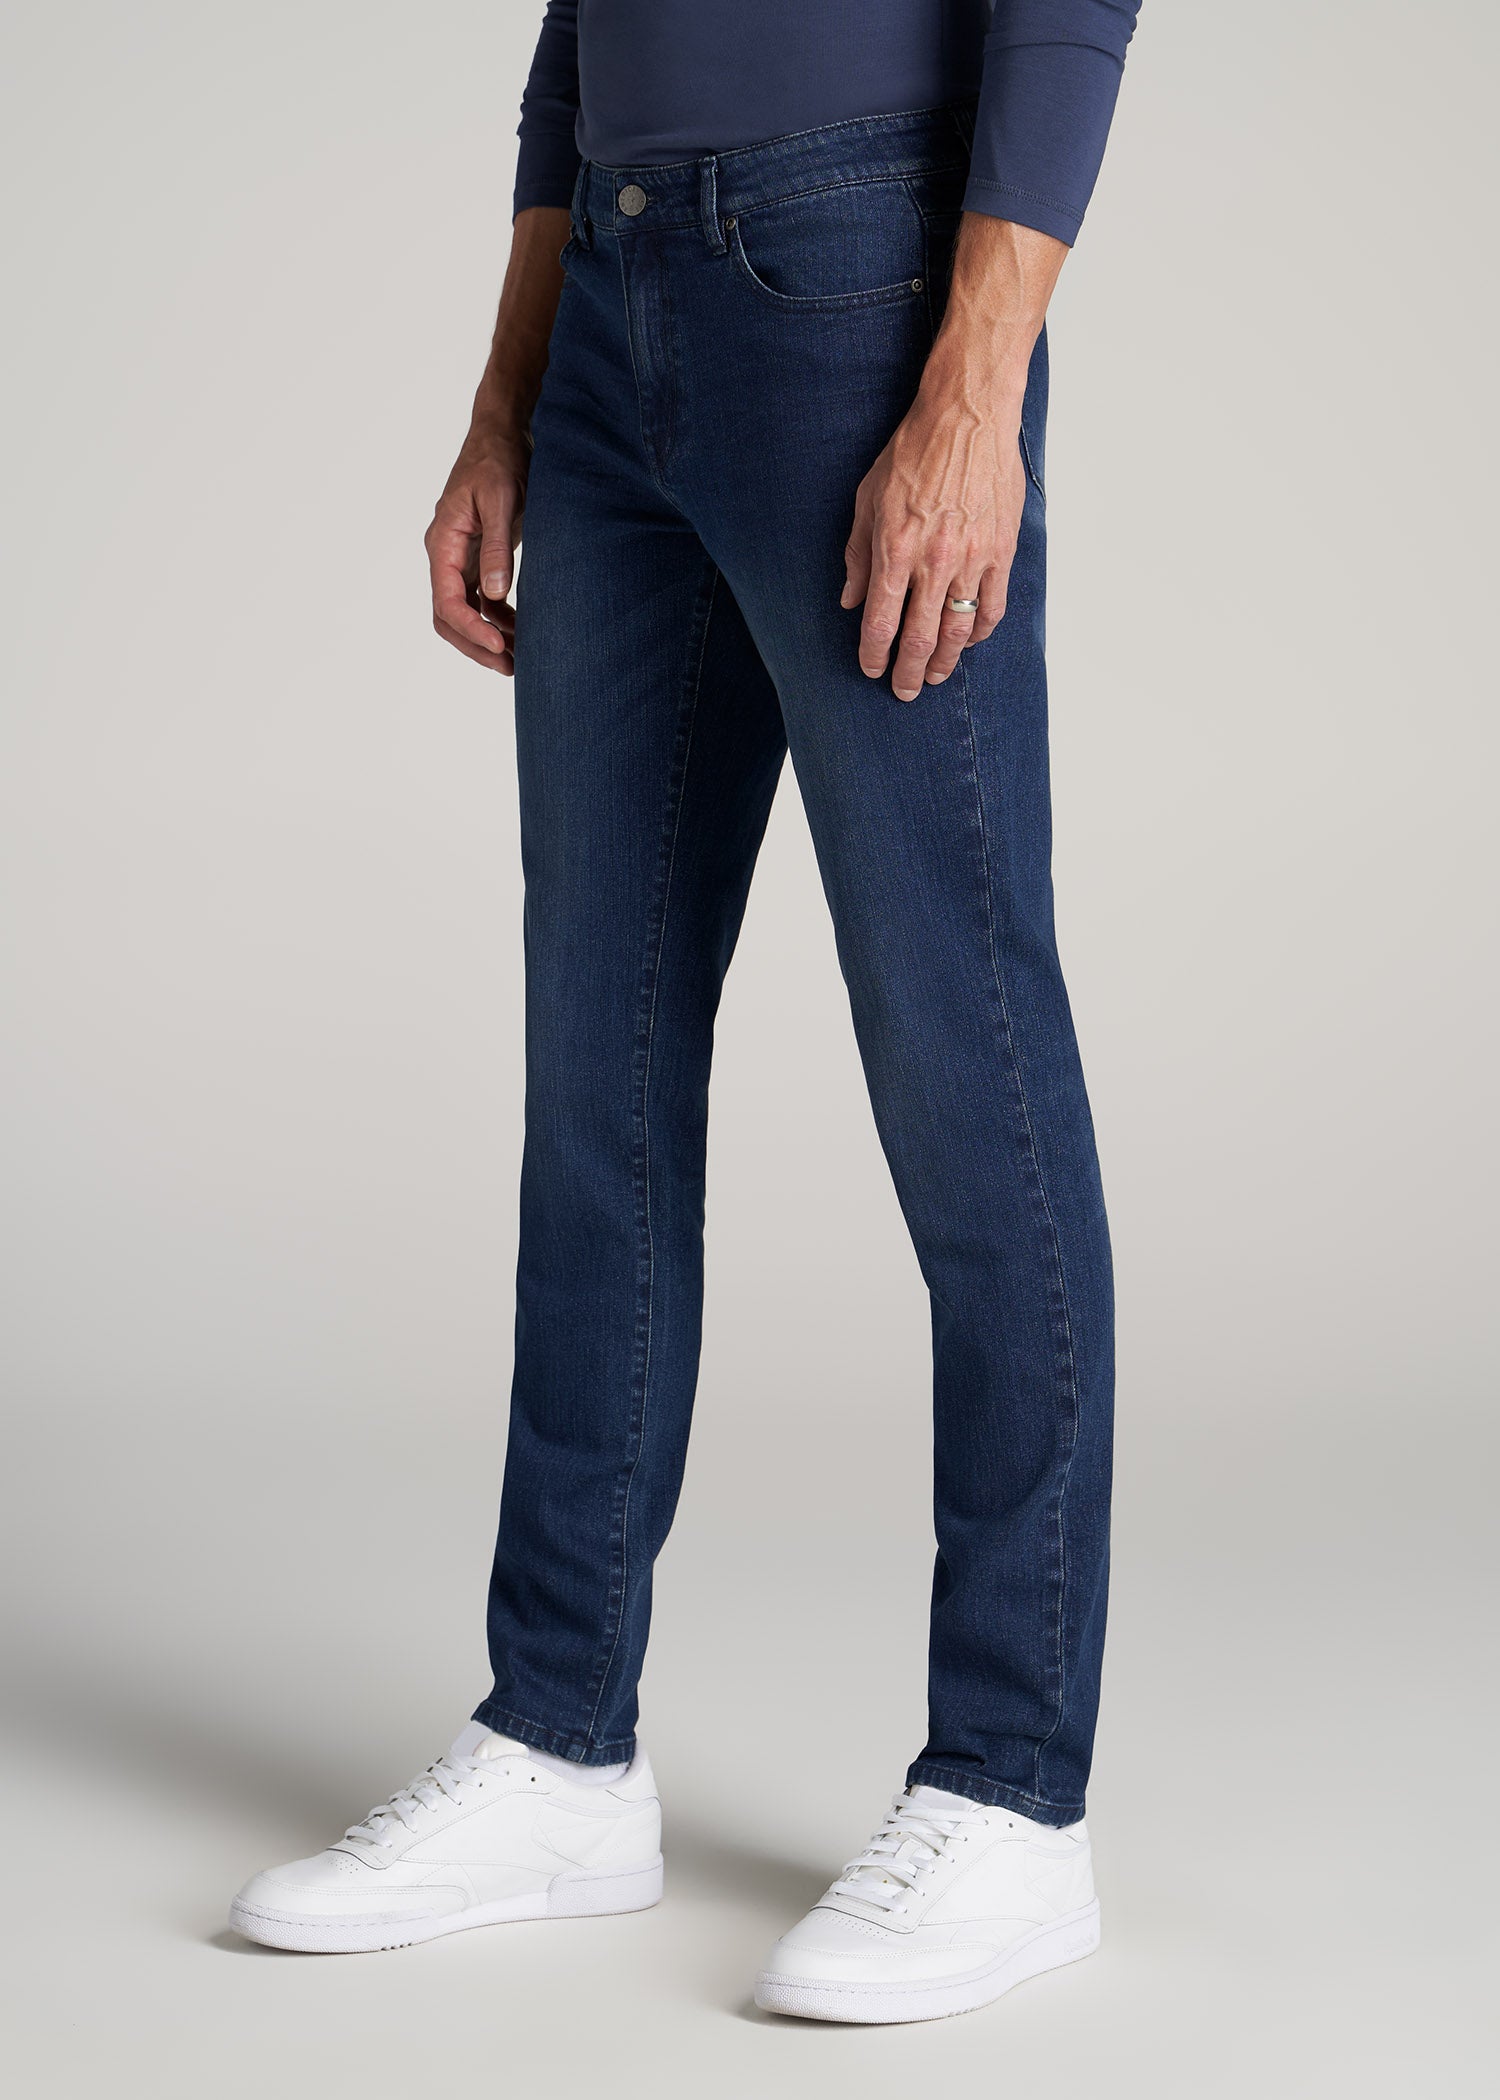 Dylan SLIM-FIT Jeans for Tall Men in Atlantic Blue